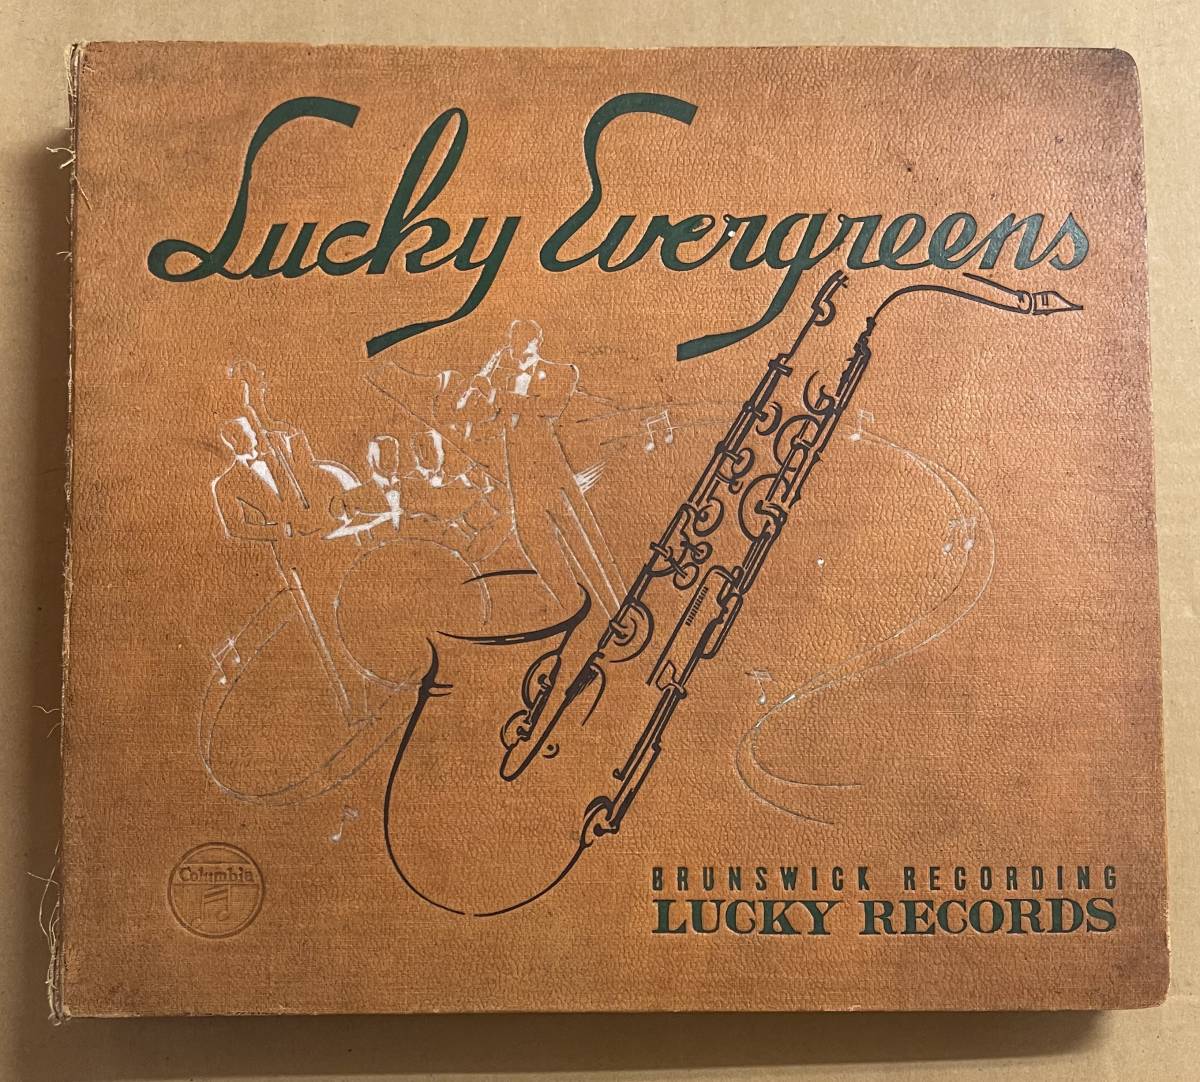 SP 6枚組 LUCKY EVERGREENS BRUNSWICK RECORDING LUCKY RECORDS BING CROSBY BOSWELL SISTERS DUKE ELLINGTON CAB CALLOWAY TEDDY WILSON